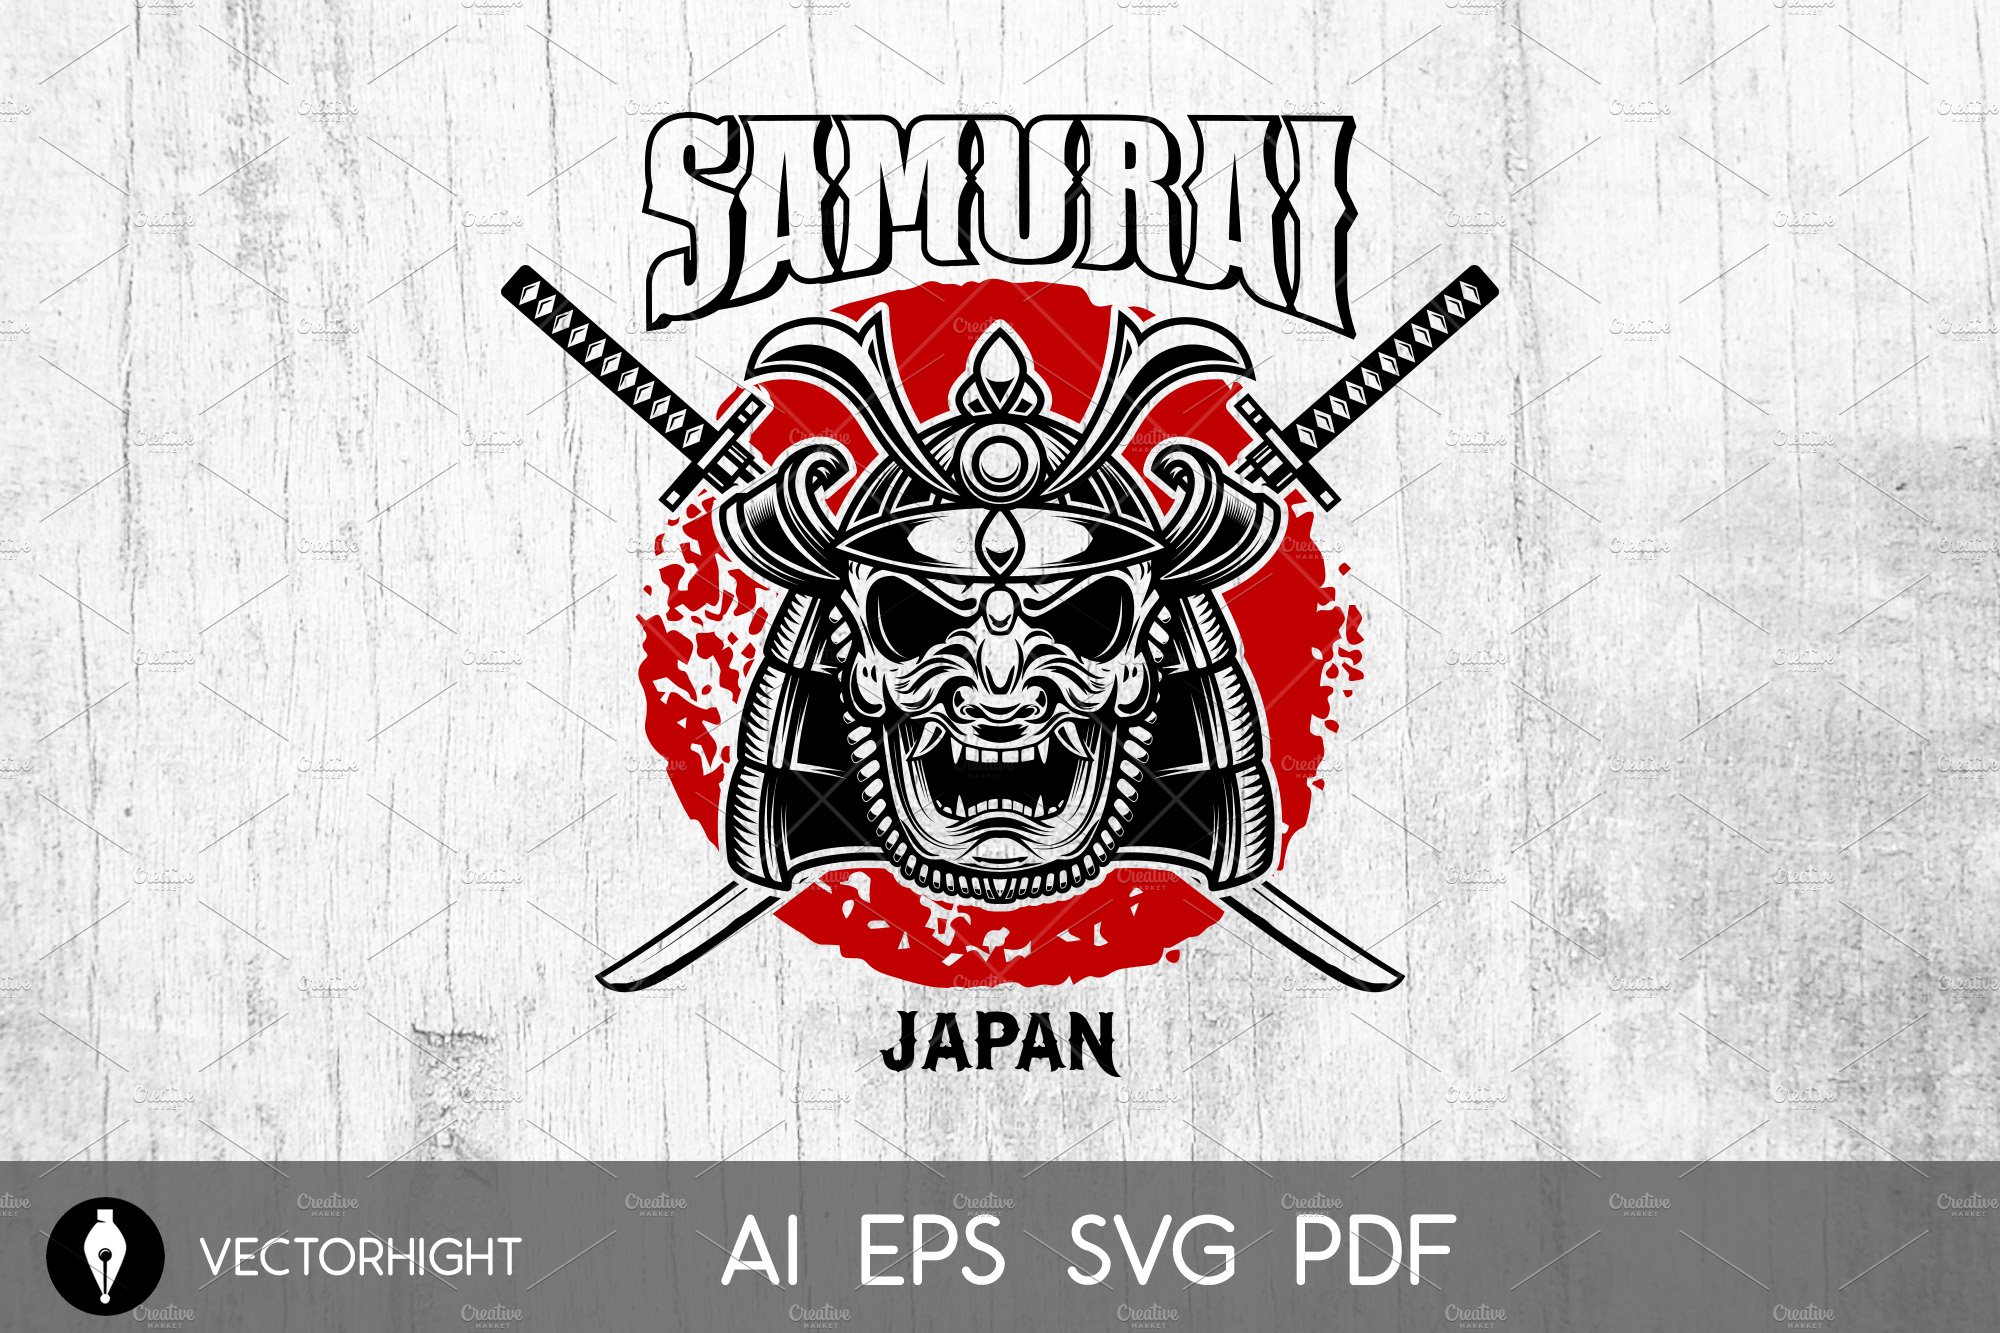 Emblem template with samurai helmet cover image.